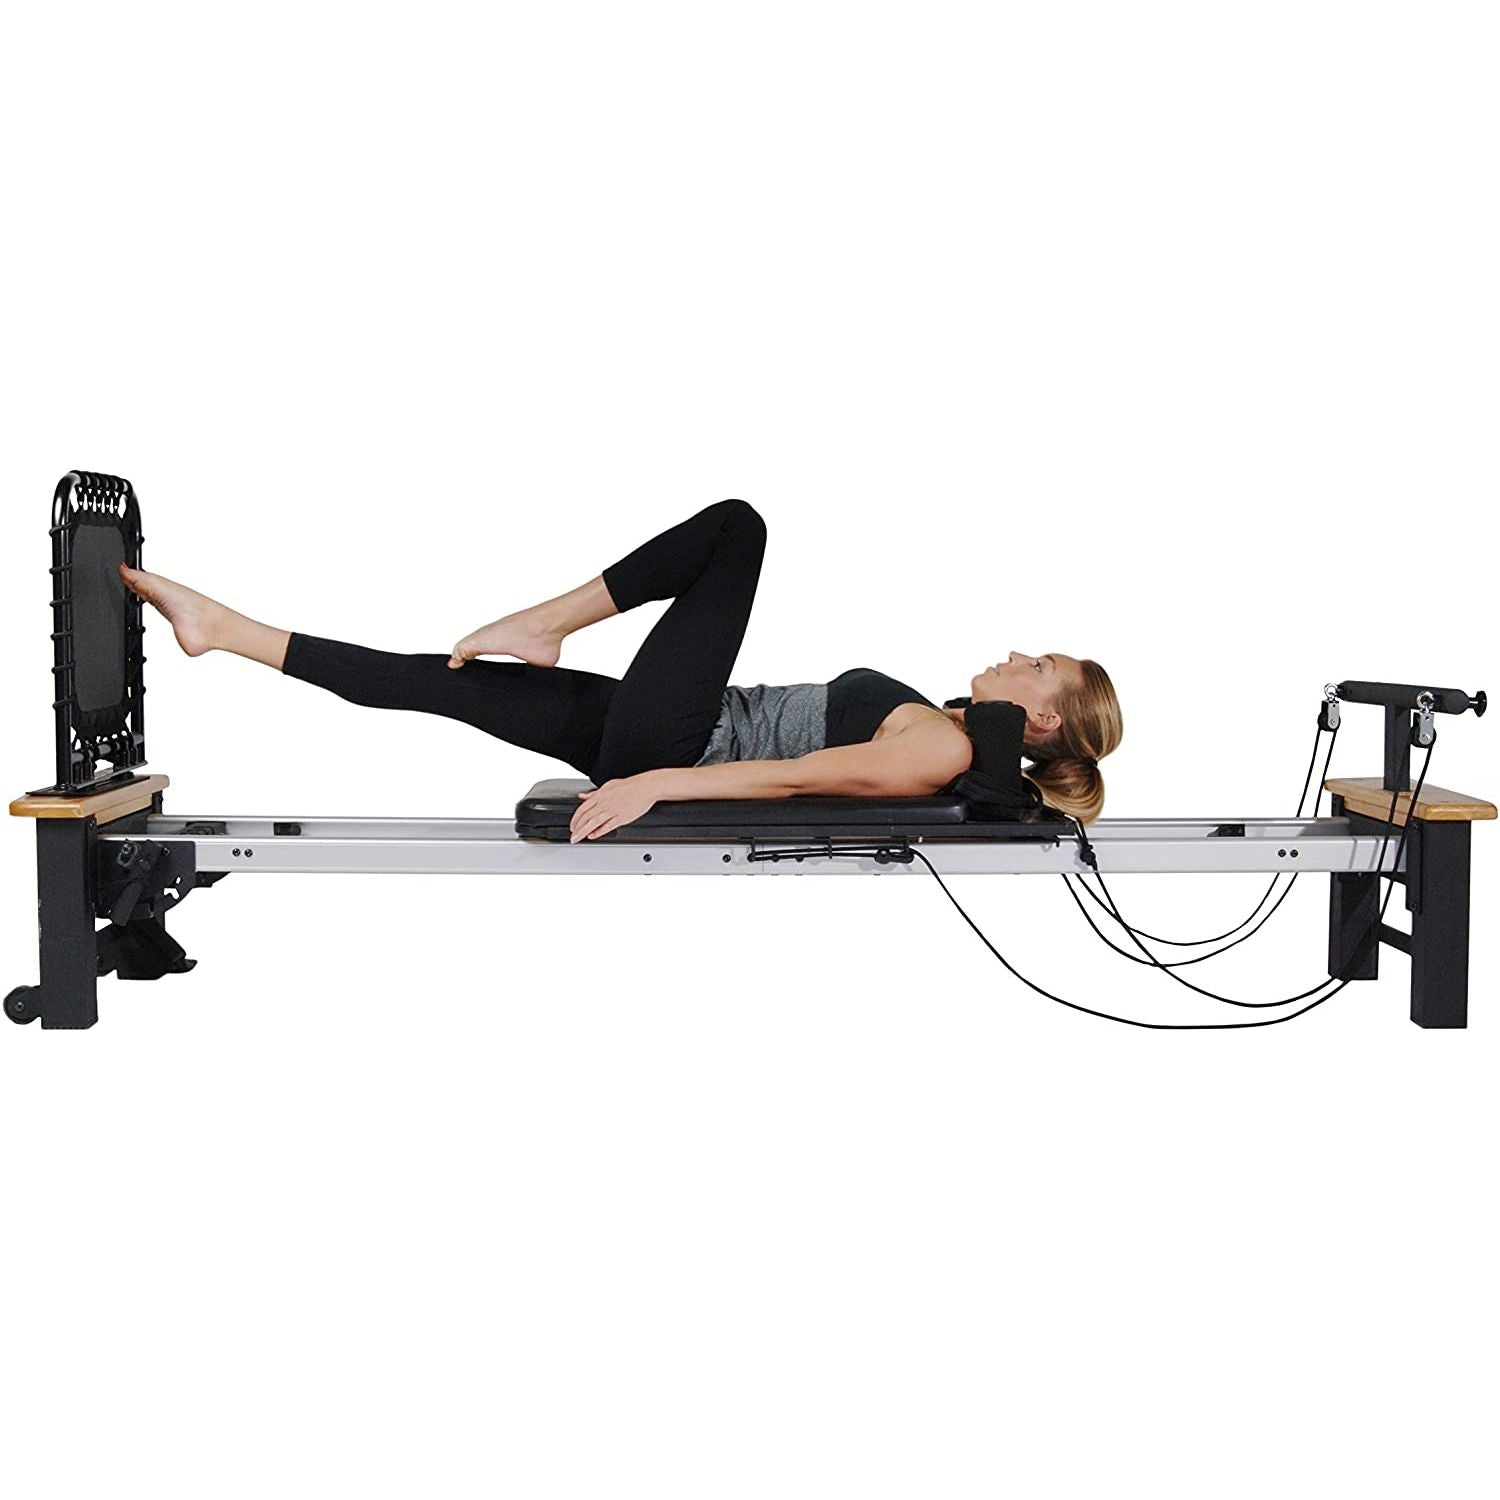 Professional aero pilates machine For Workouts 